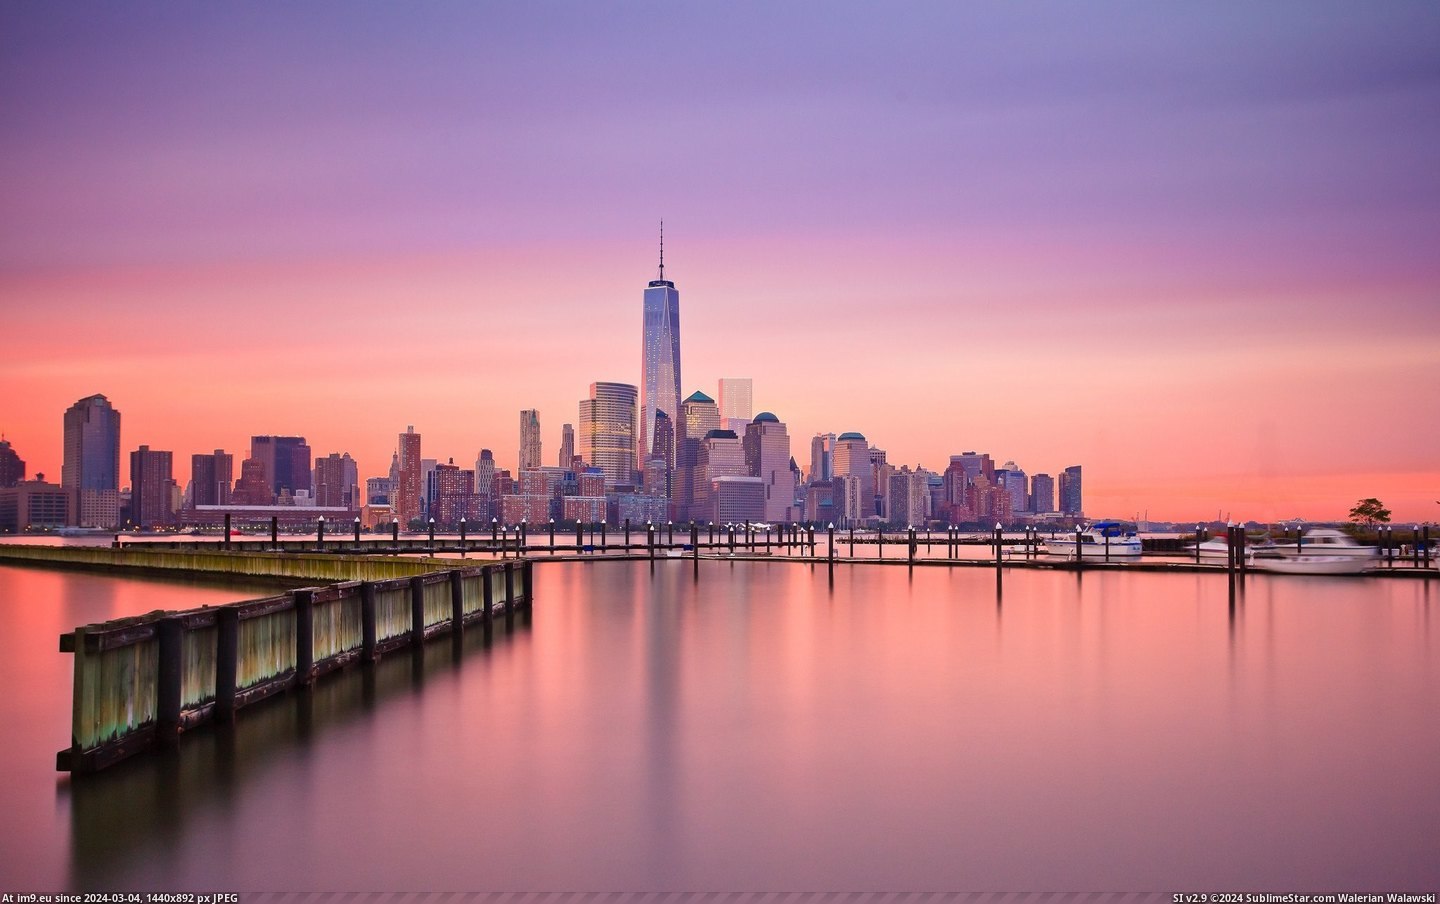 #Sunrise  #Manhattan [Pics] Lower Manhattan Sunrise Pic. (Изображение из альбом My r/PICS favs))